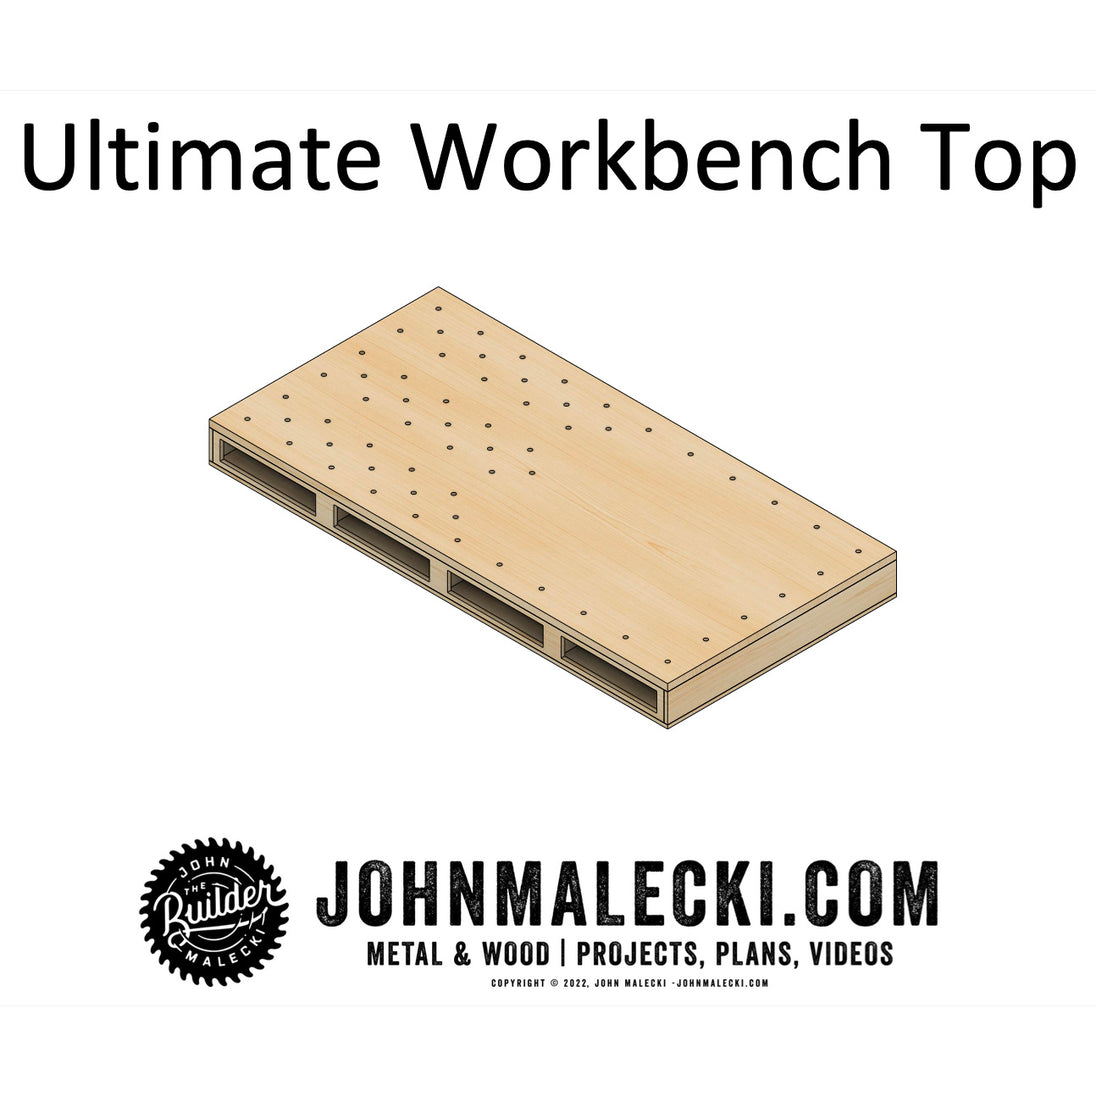 Ultimate Workbench Top - John Malecki